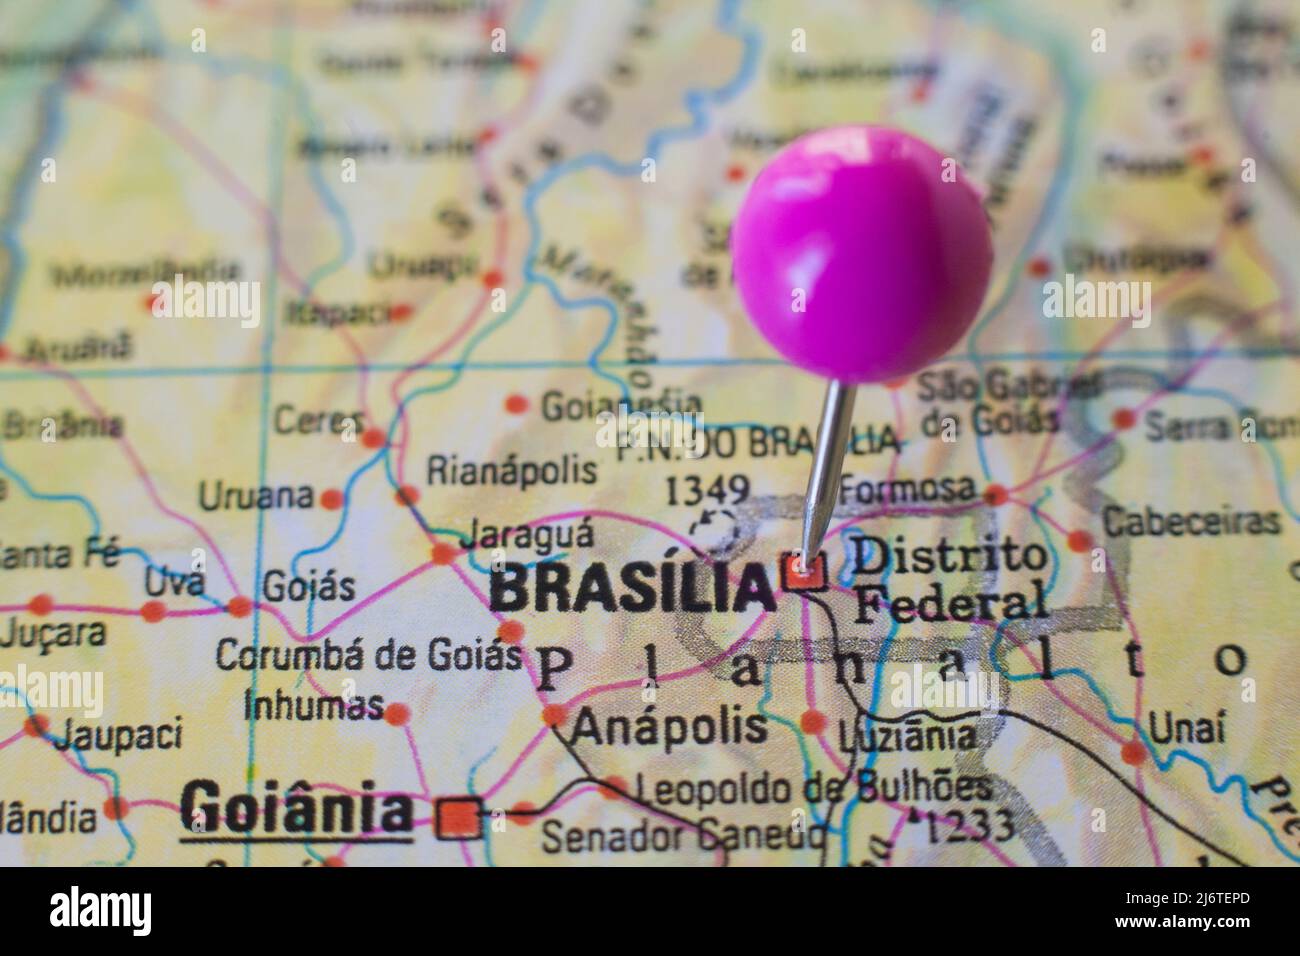 Pushpin marking on Brasilia, Brazil. Selective focus on city name Stock Photo